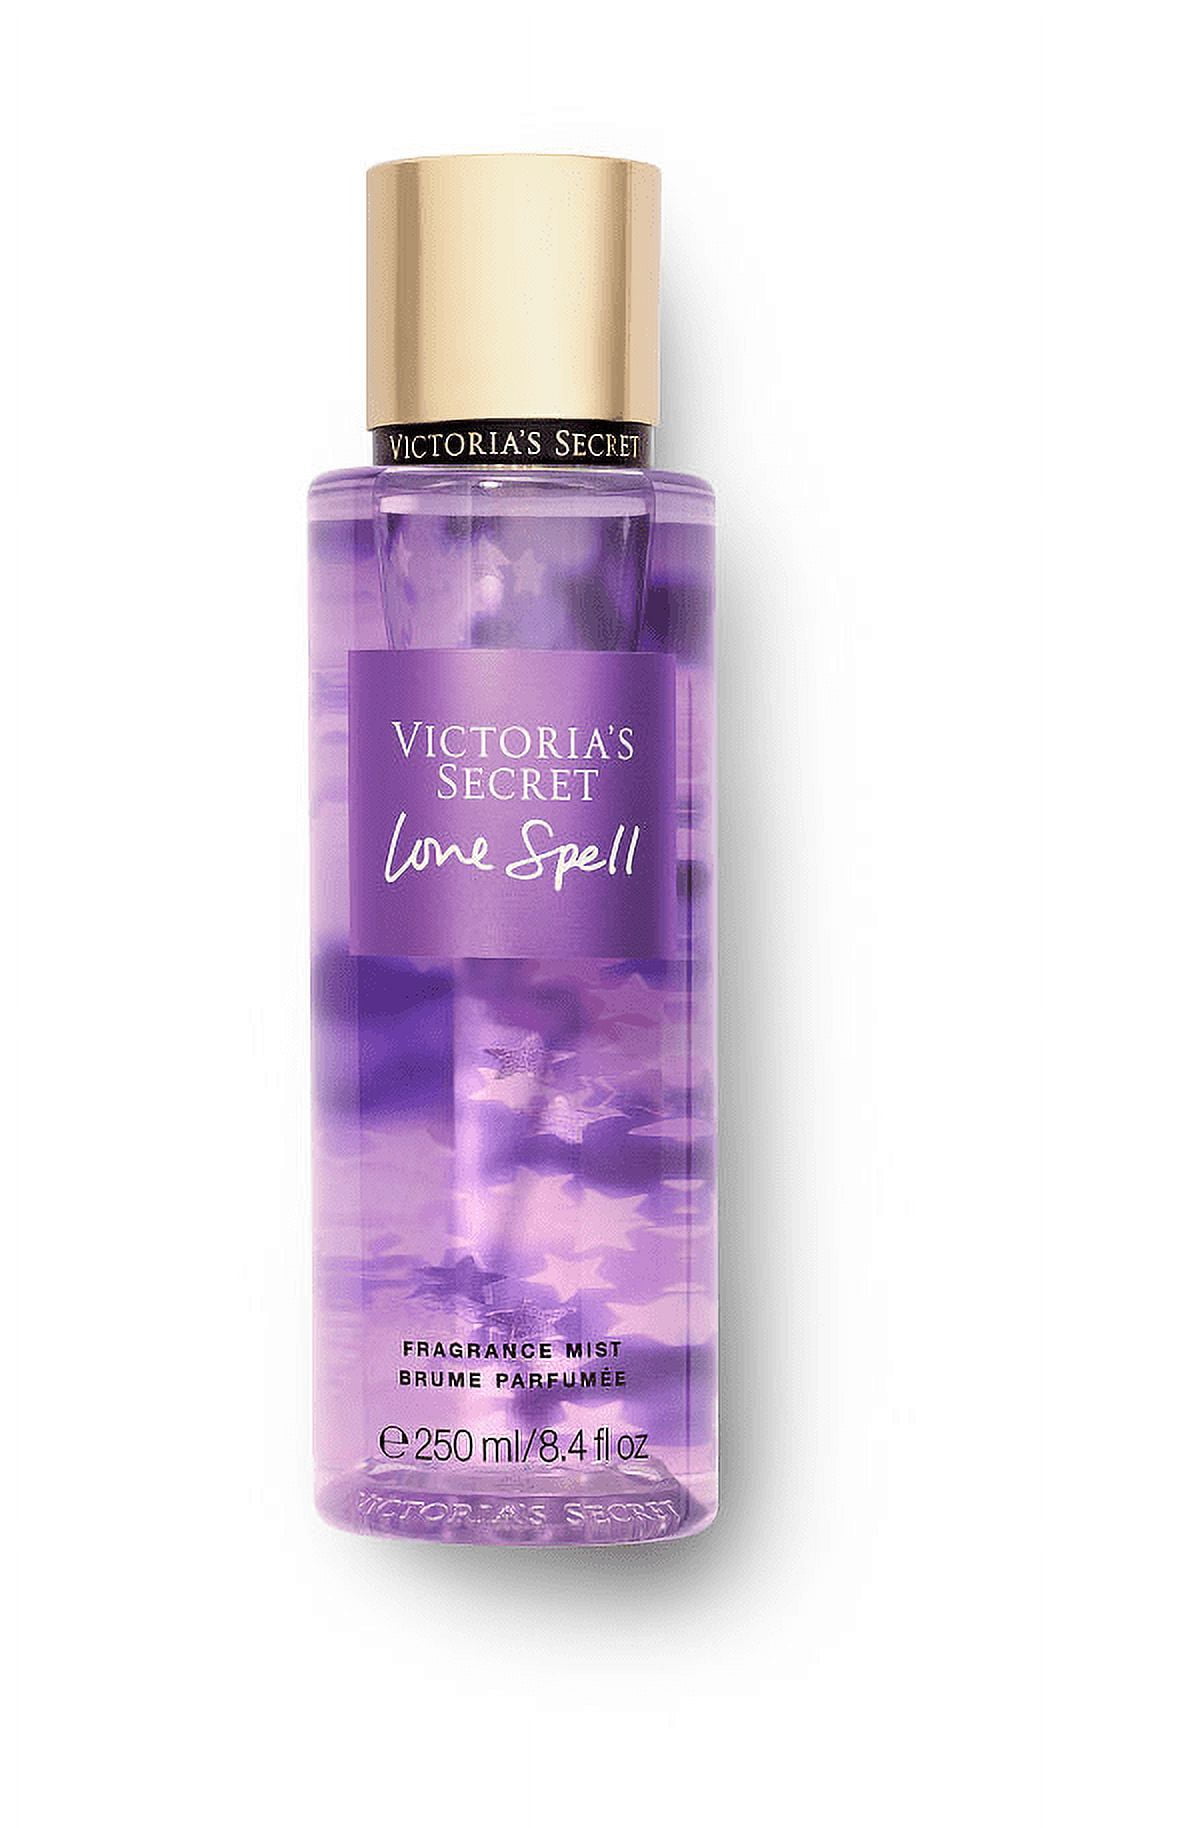 Brume parfumée Victoria's Secret body mist fragrance Love Spell